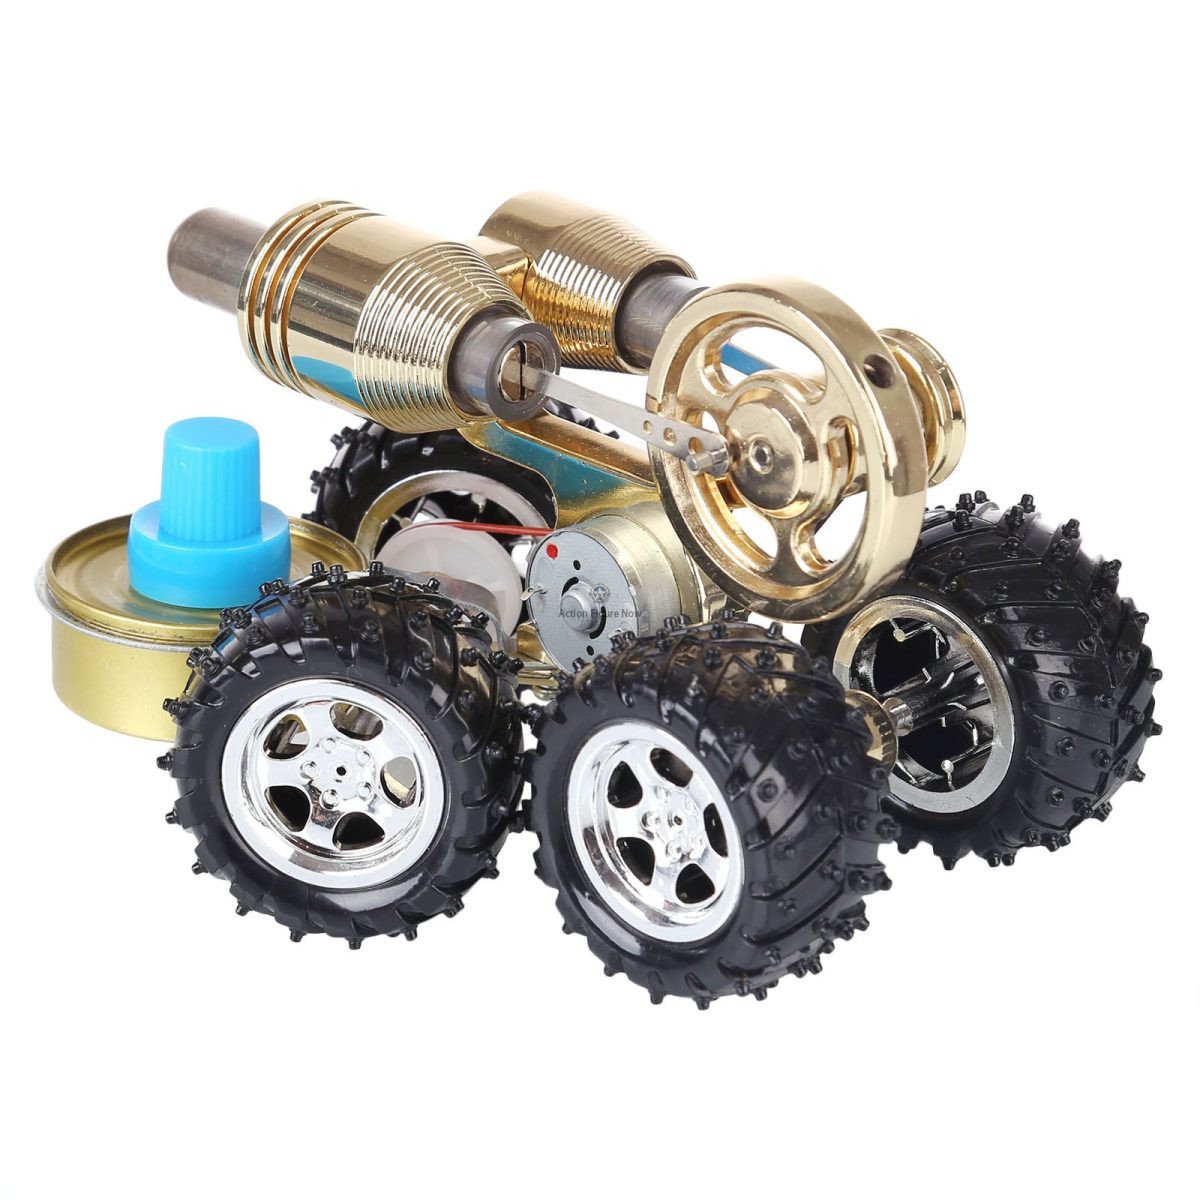 Stirling Engine Car STEM Education Toy - Interactive Stirling Vehicle Model Toy for Kids